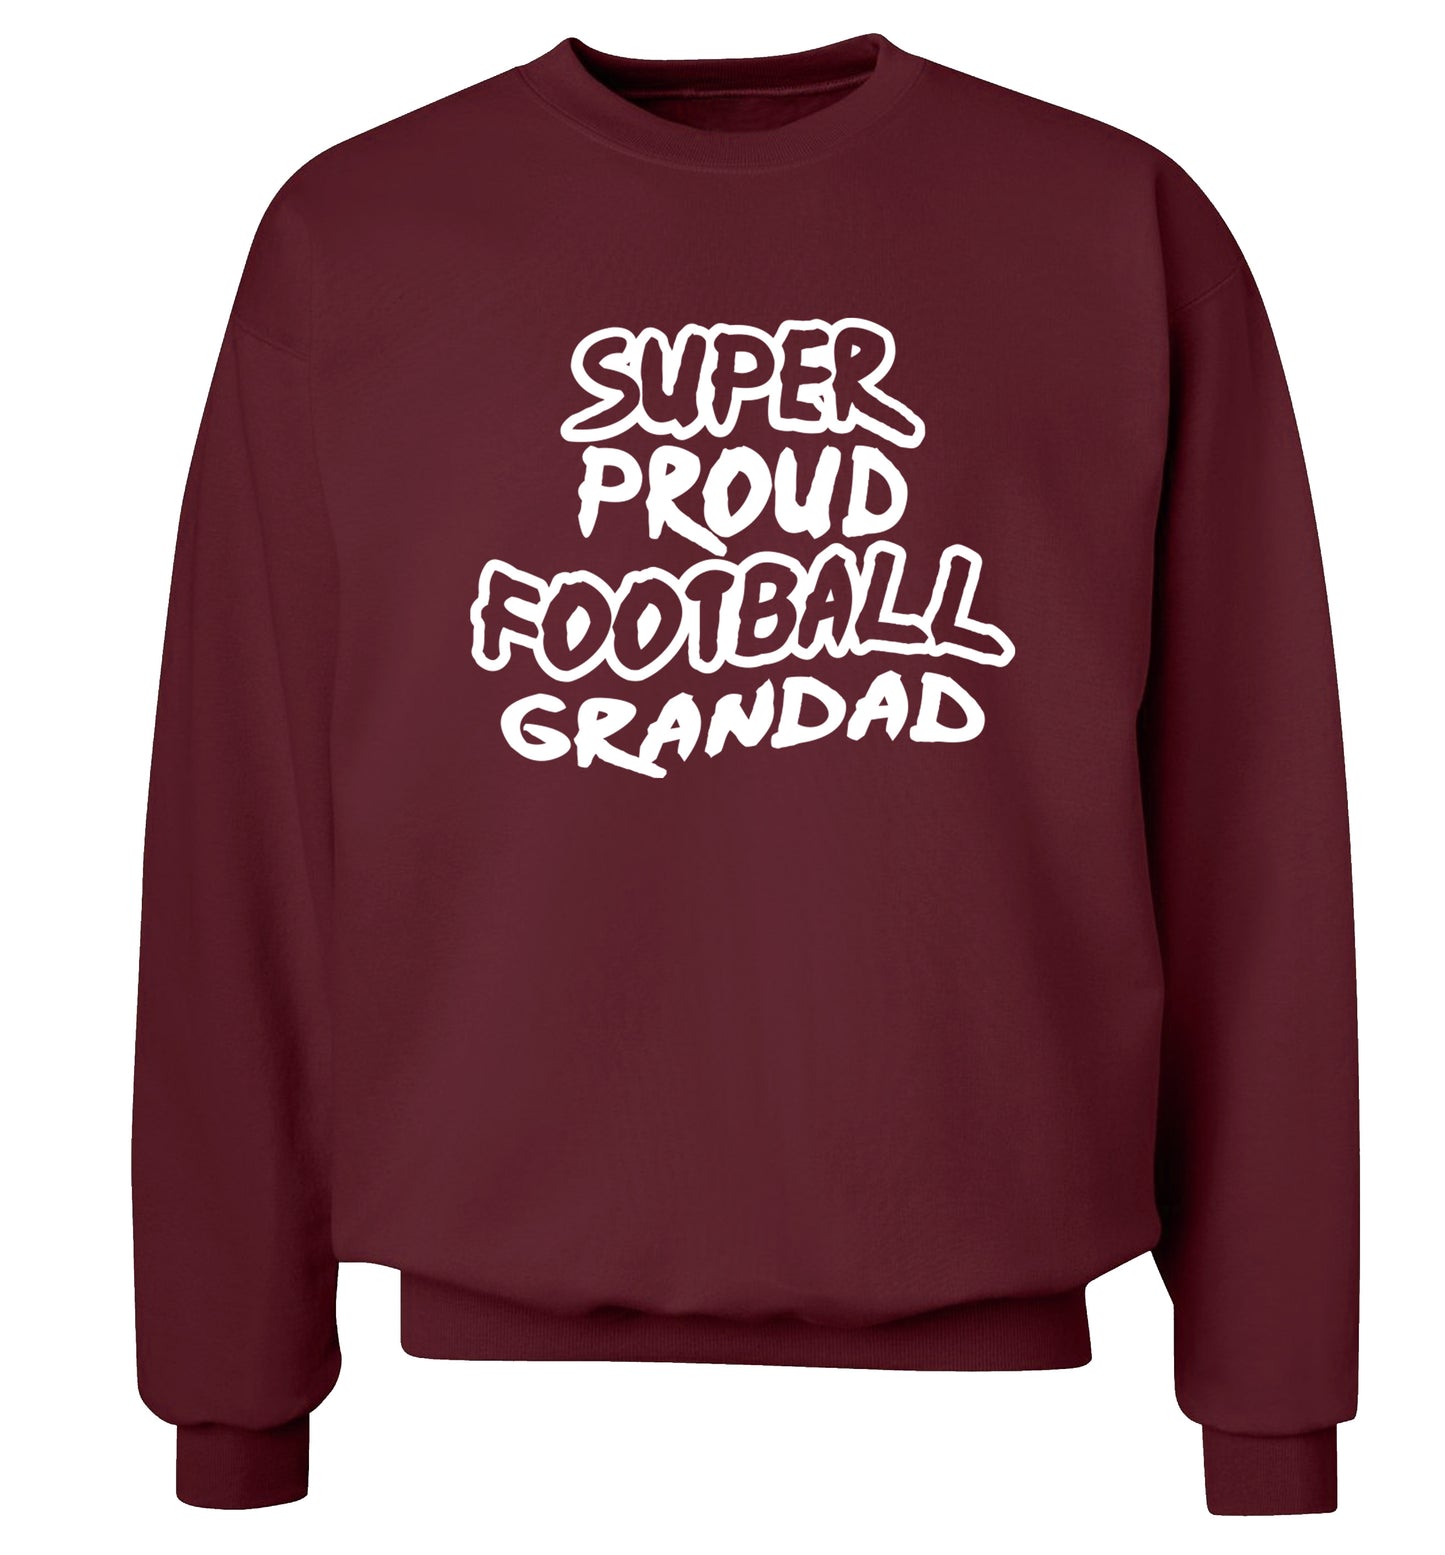 Super proud football grandad Adult's unisexmaroon Sweater 2XL